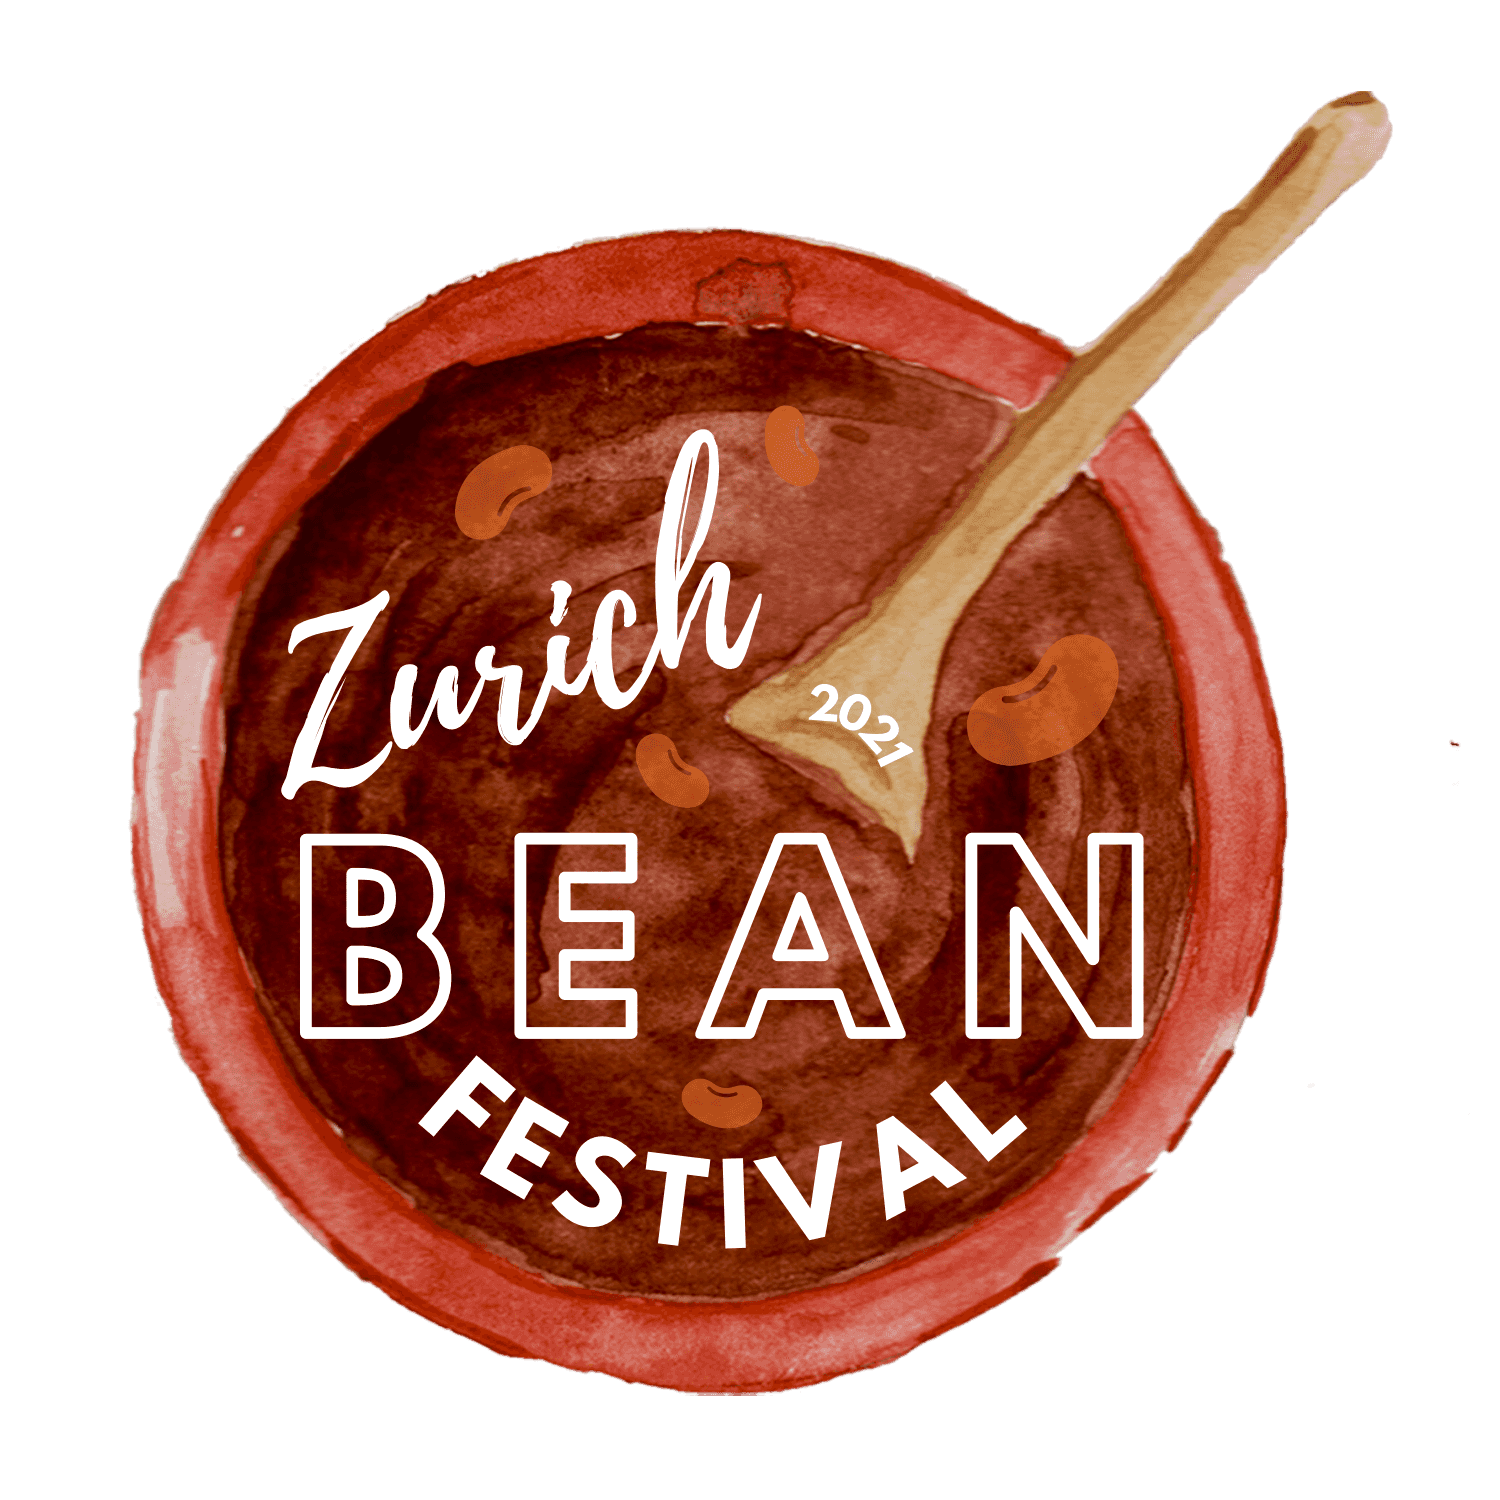 Zurich Bean Festival Committee logo